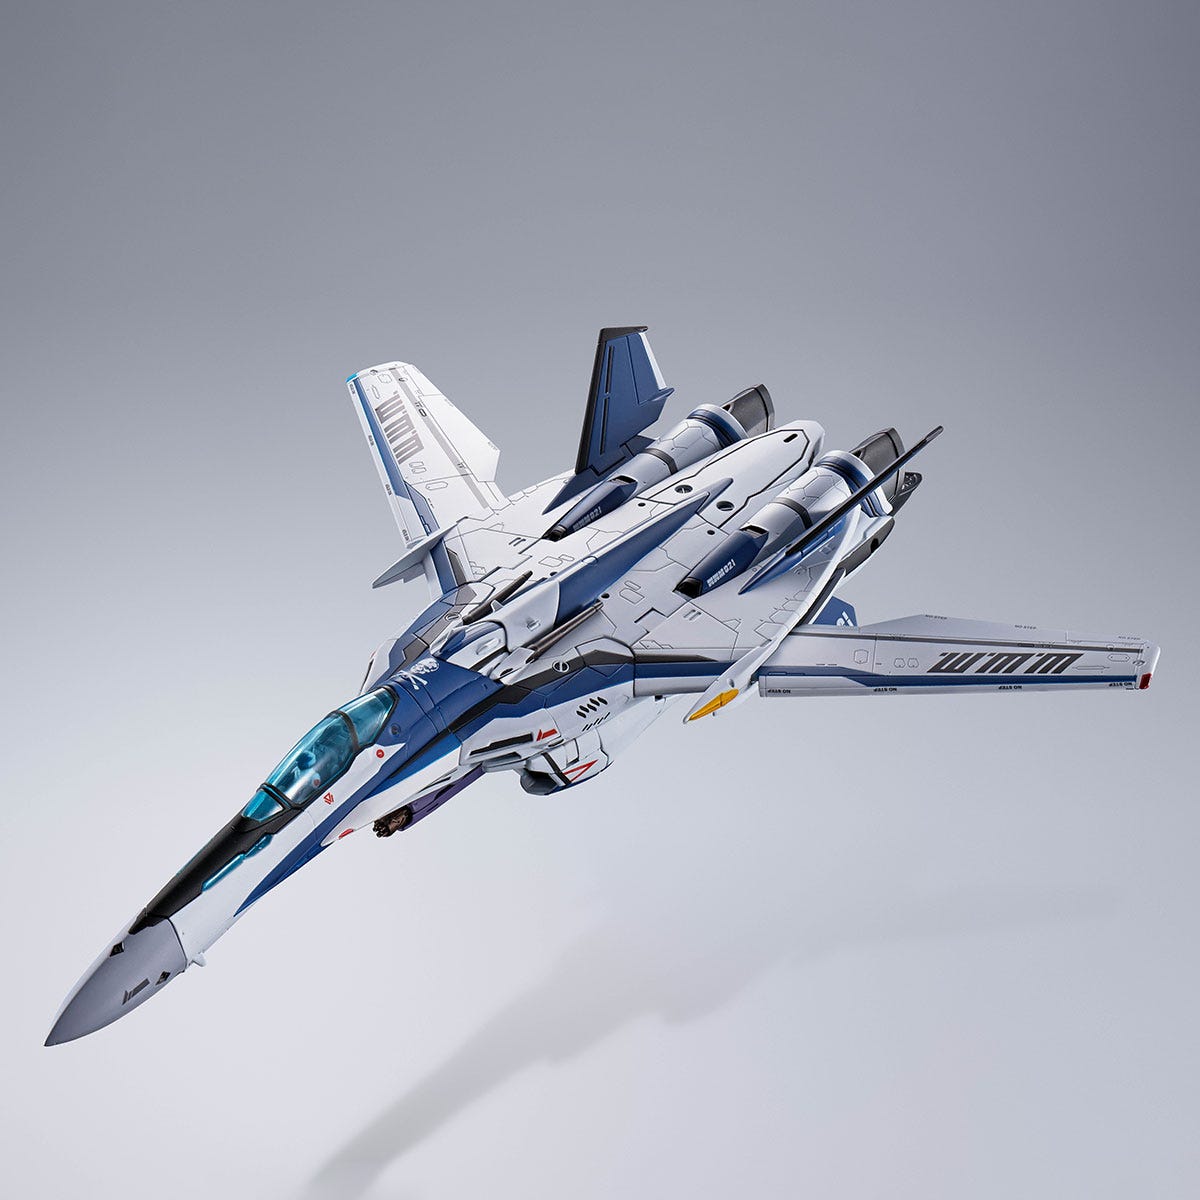 Bandai Spirits DX Chogokin VF - 25 Messiah Valkyrie Worldwide Anniversary "Macross Frontier" Fighter Collectible Figure